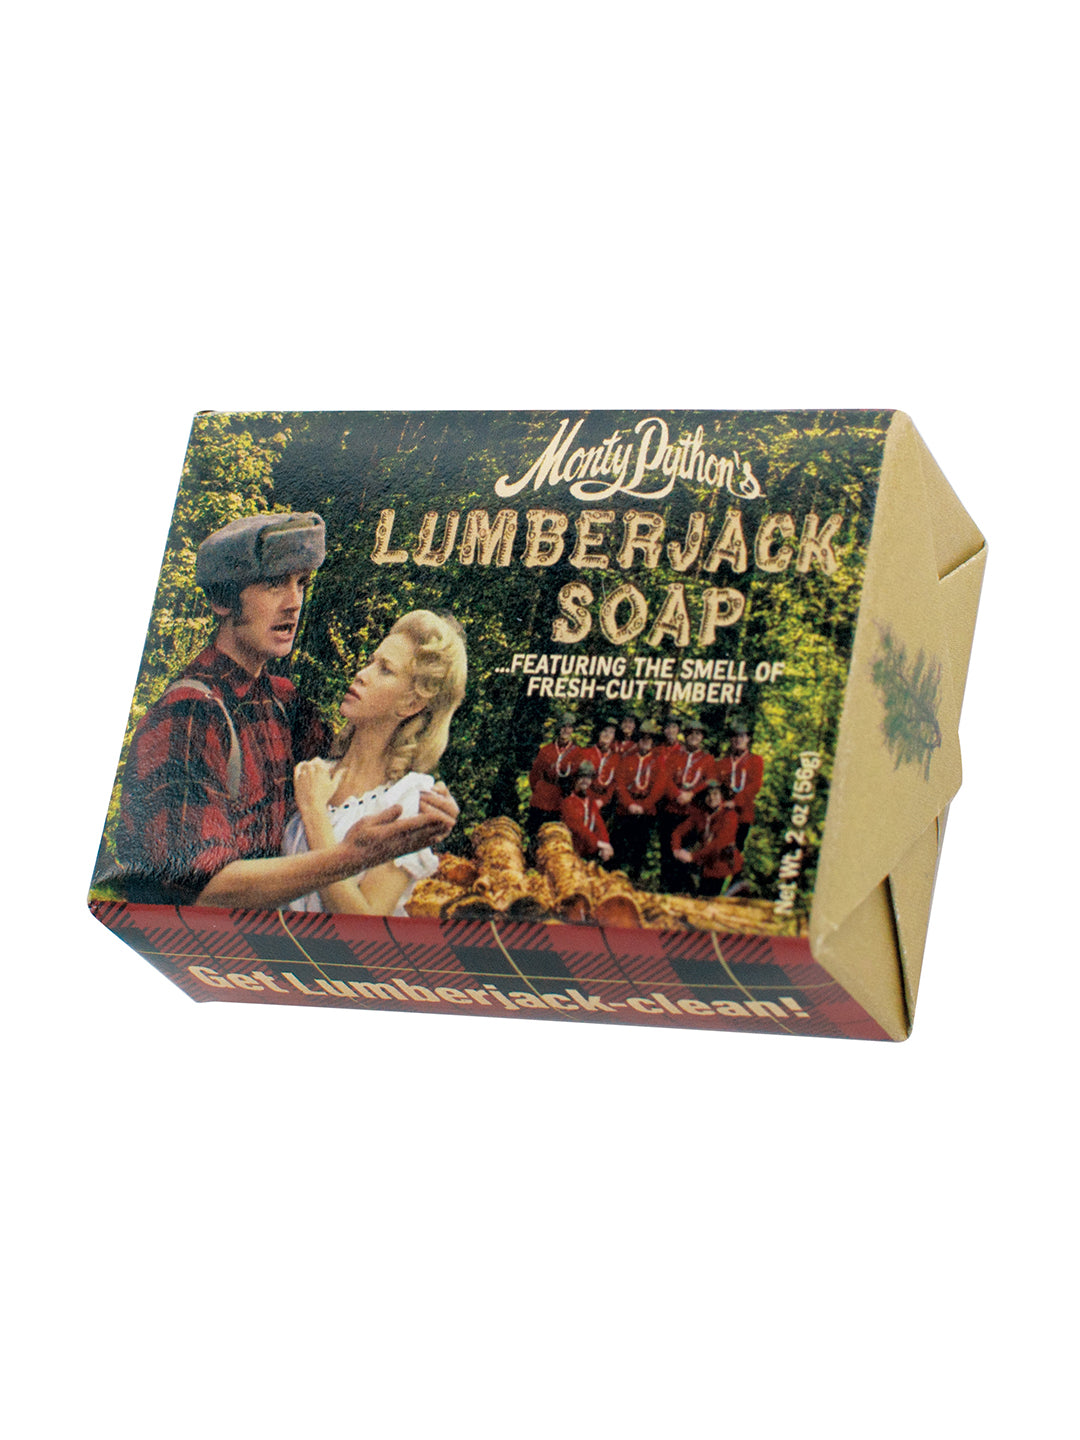 Monty Python's Lumberjack Soap UPG